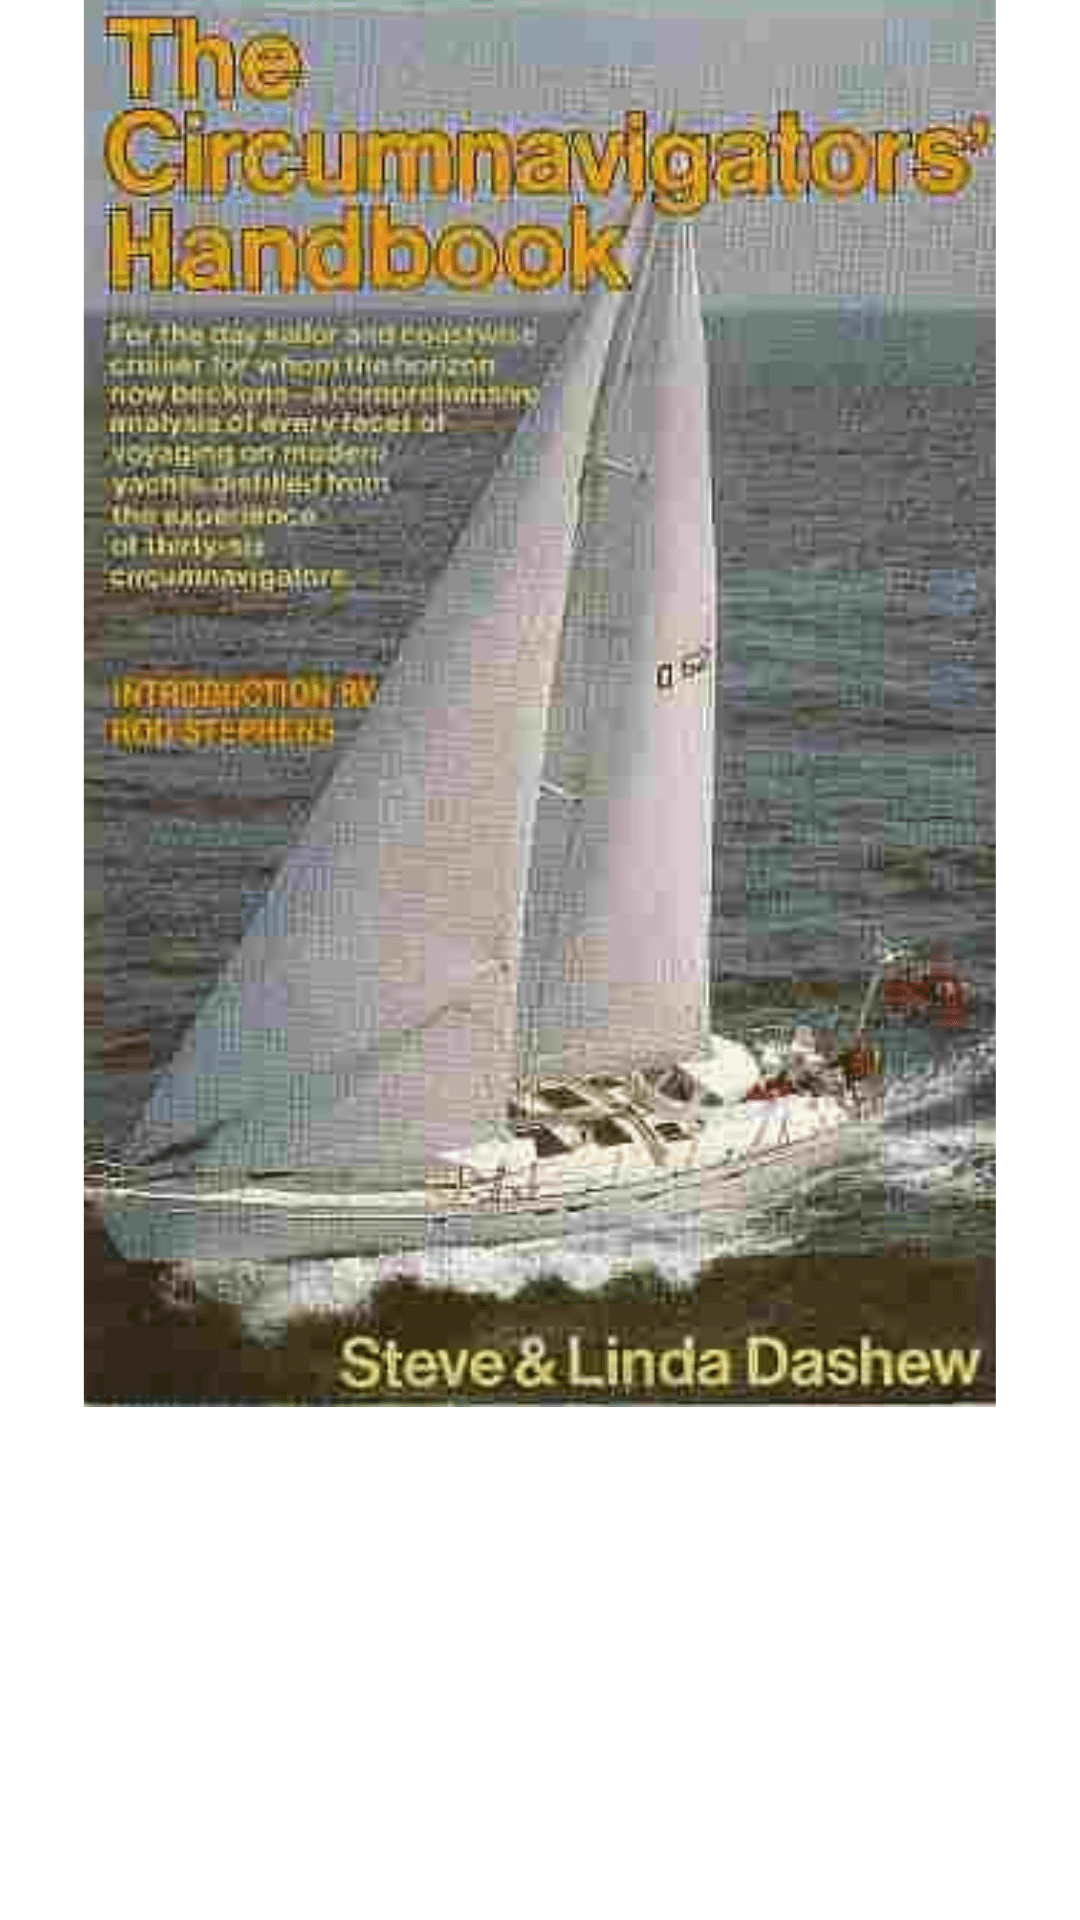 The circumnavigator's handbook by Steve Dashew